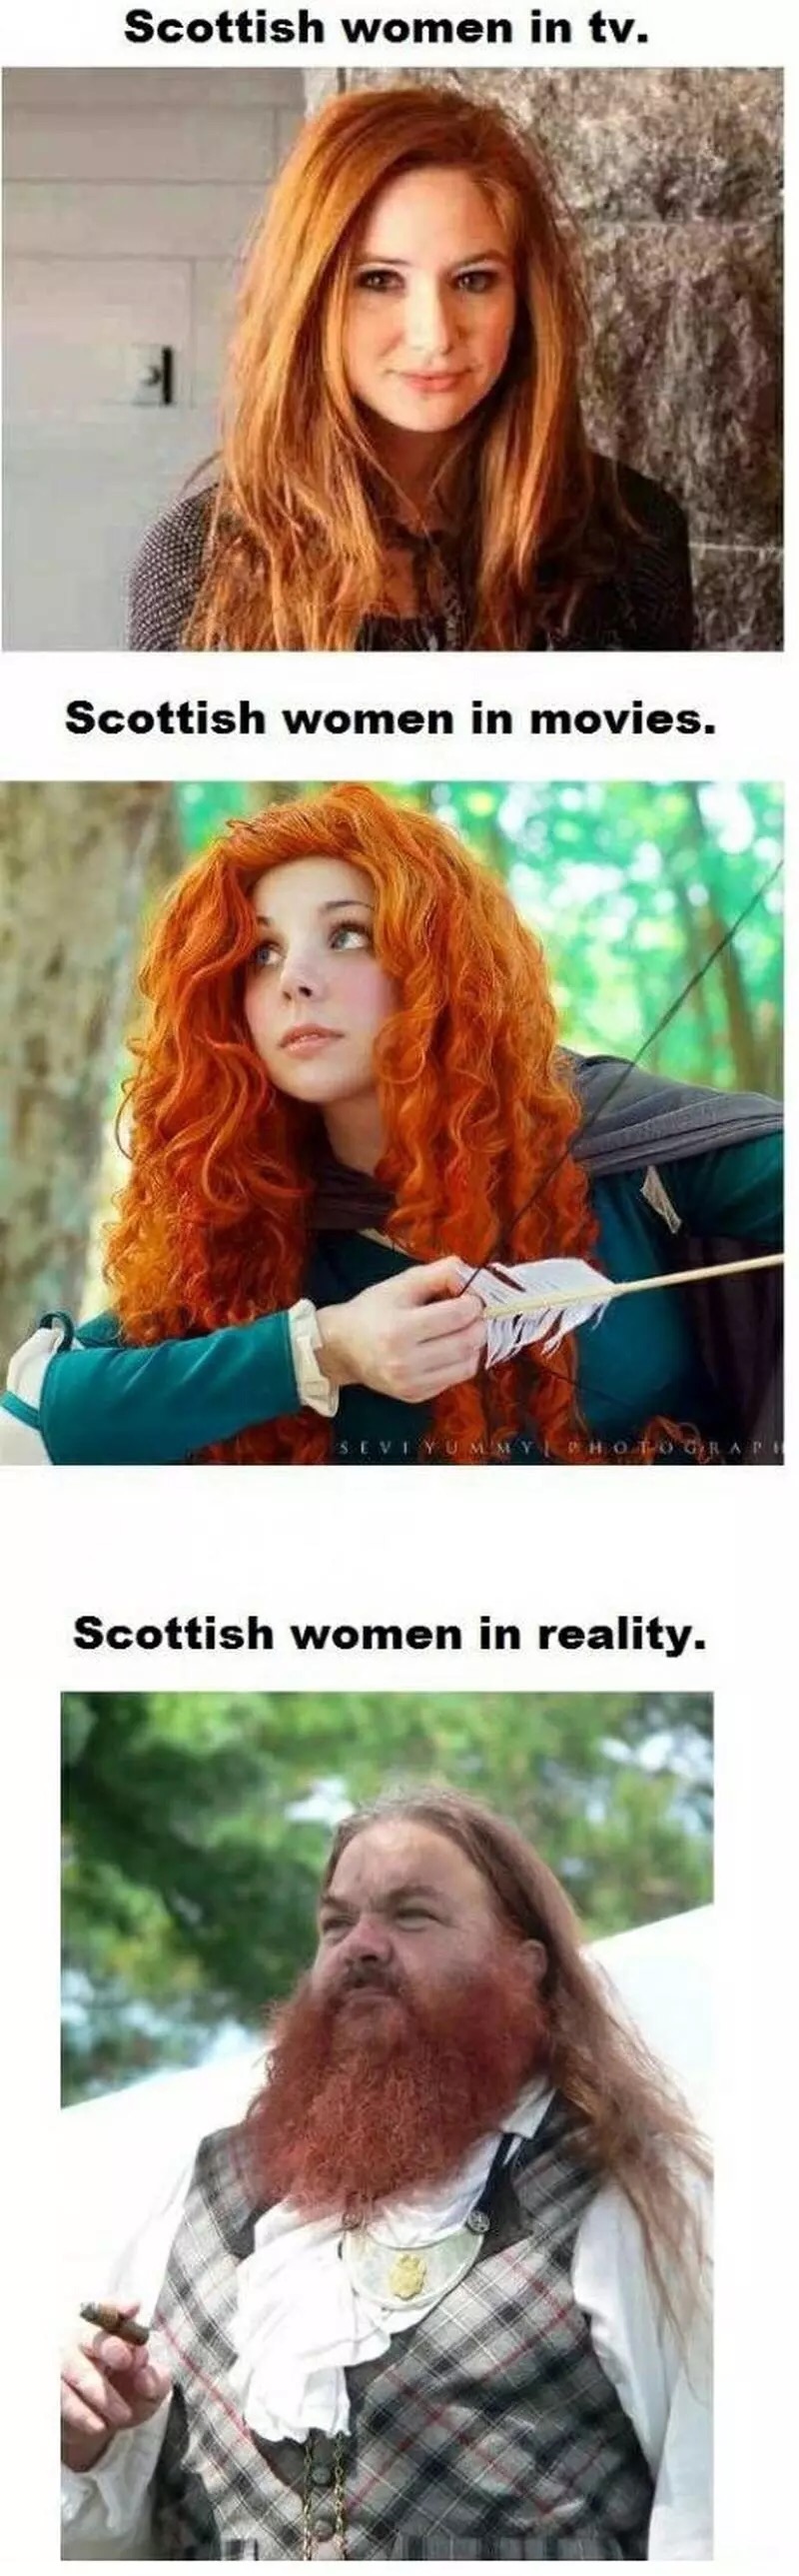 scottish women in real life - Scottish women in tv. Scottish women in movies. Evtyummy Do Scottish women in reality.